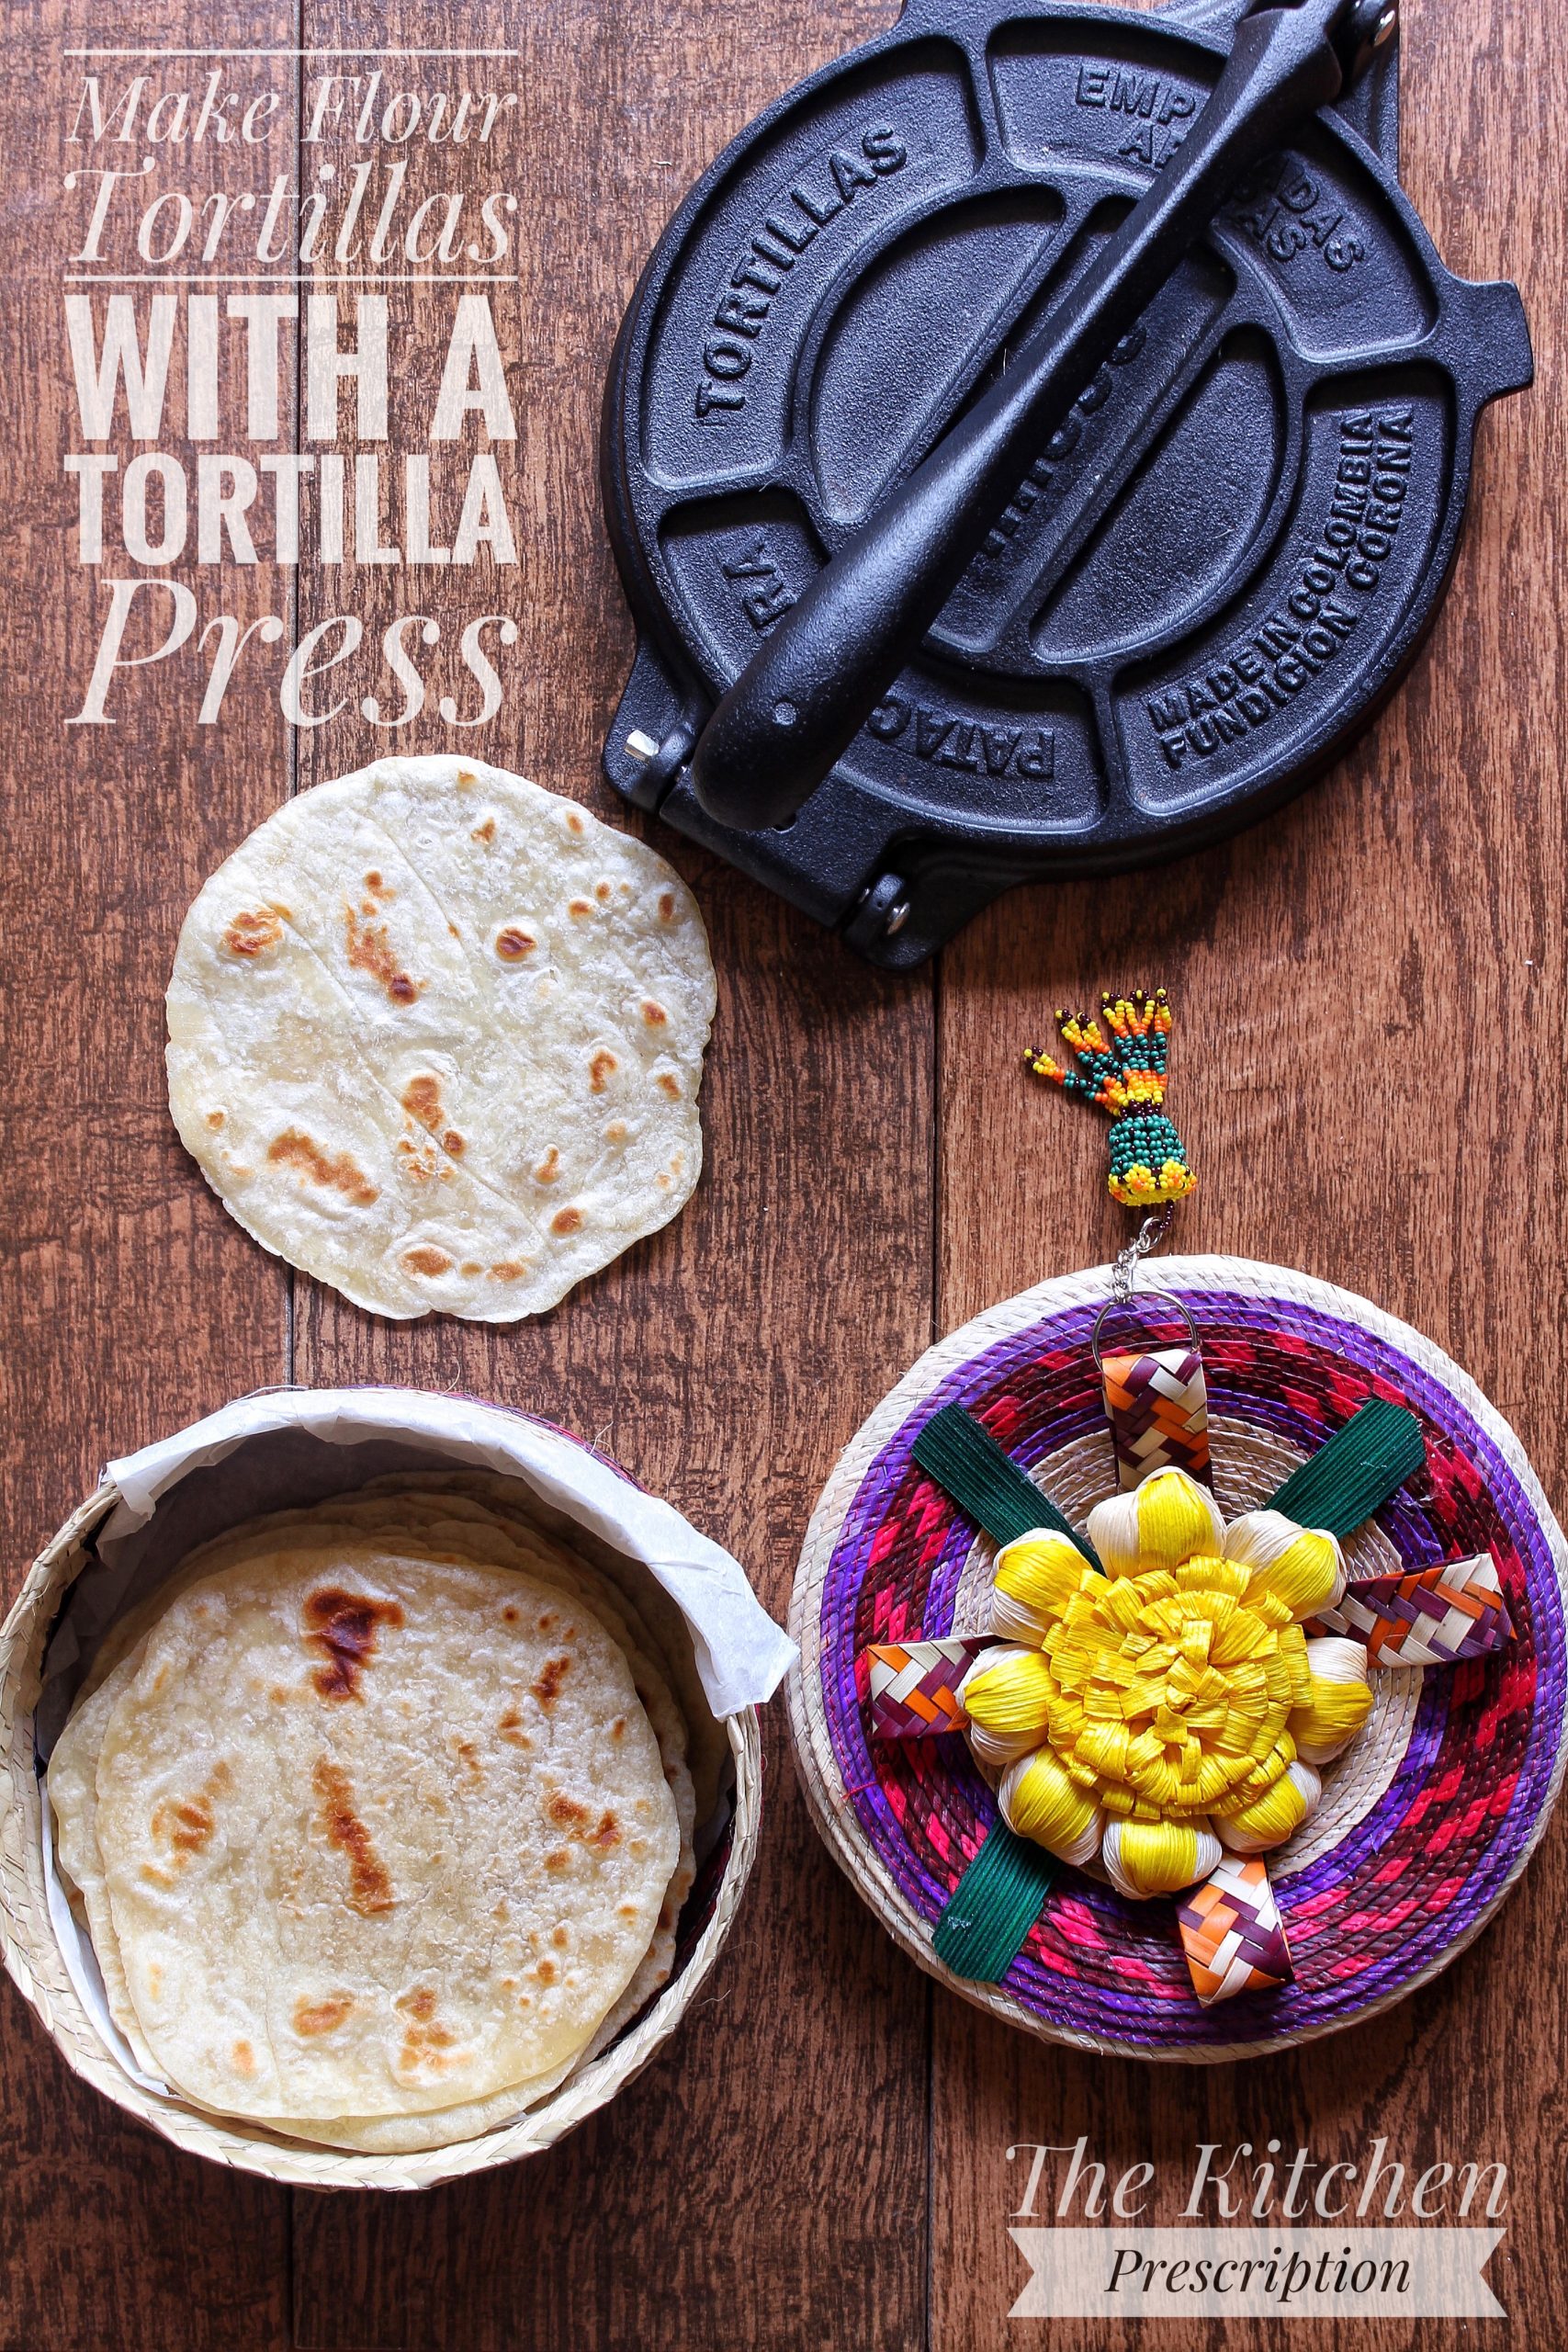 https://thekitchenprescription.com/wp-content/uploads/2020/05/Make-Flour-Tortillas-with-a-Tortilla-Press-1-scaled.jpg